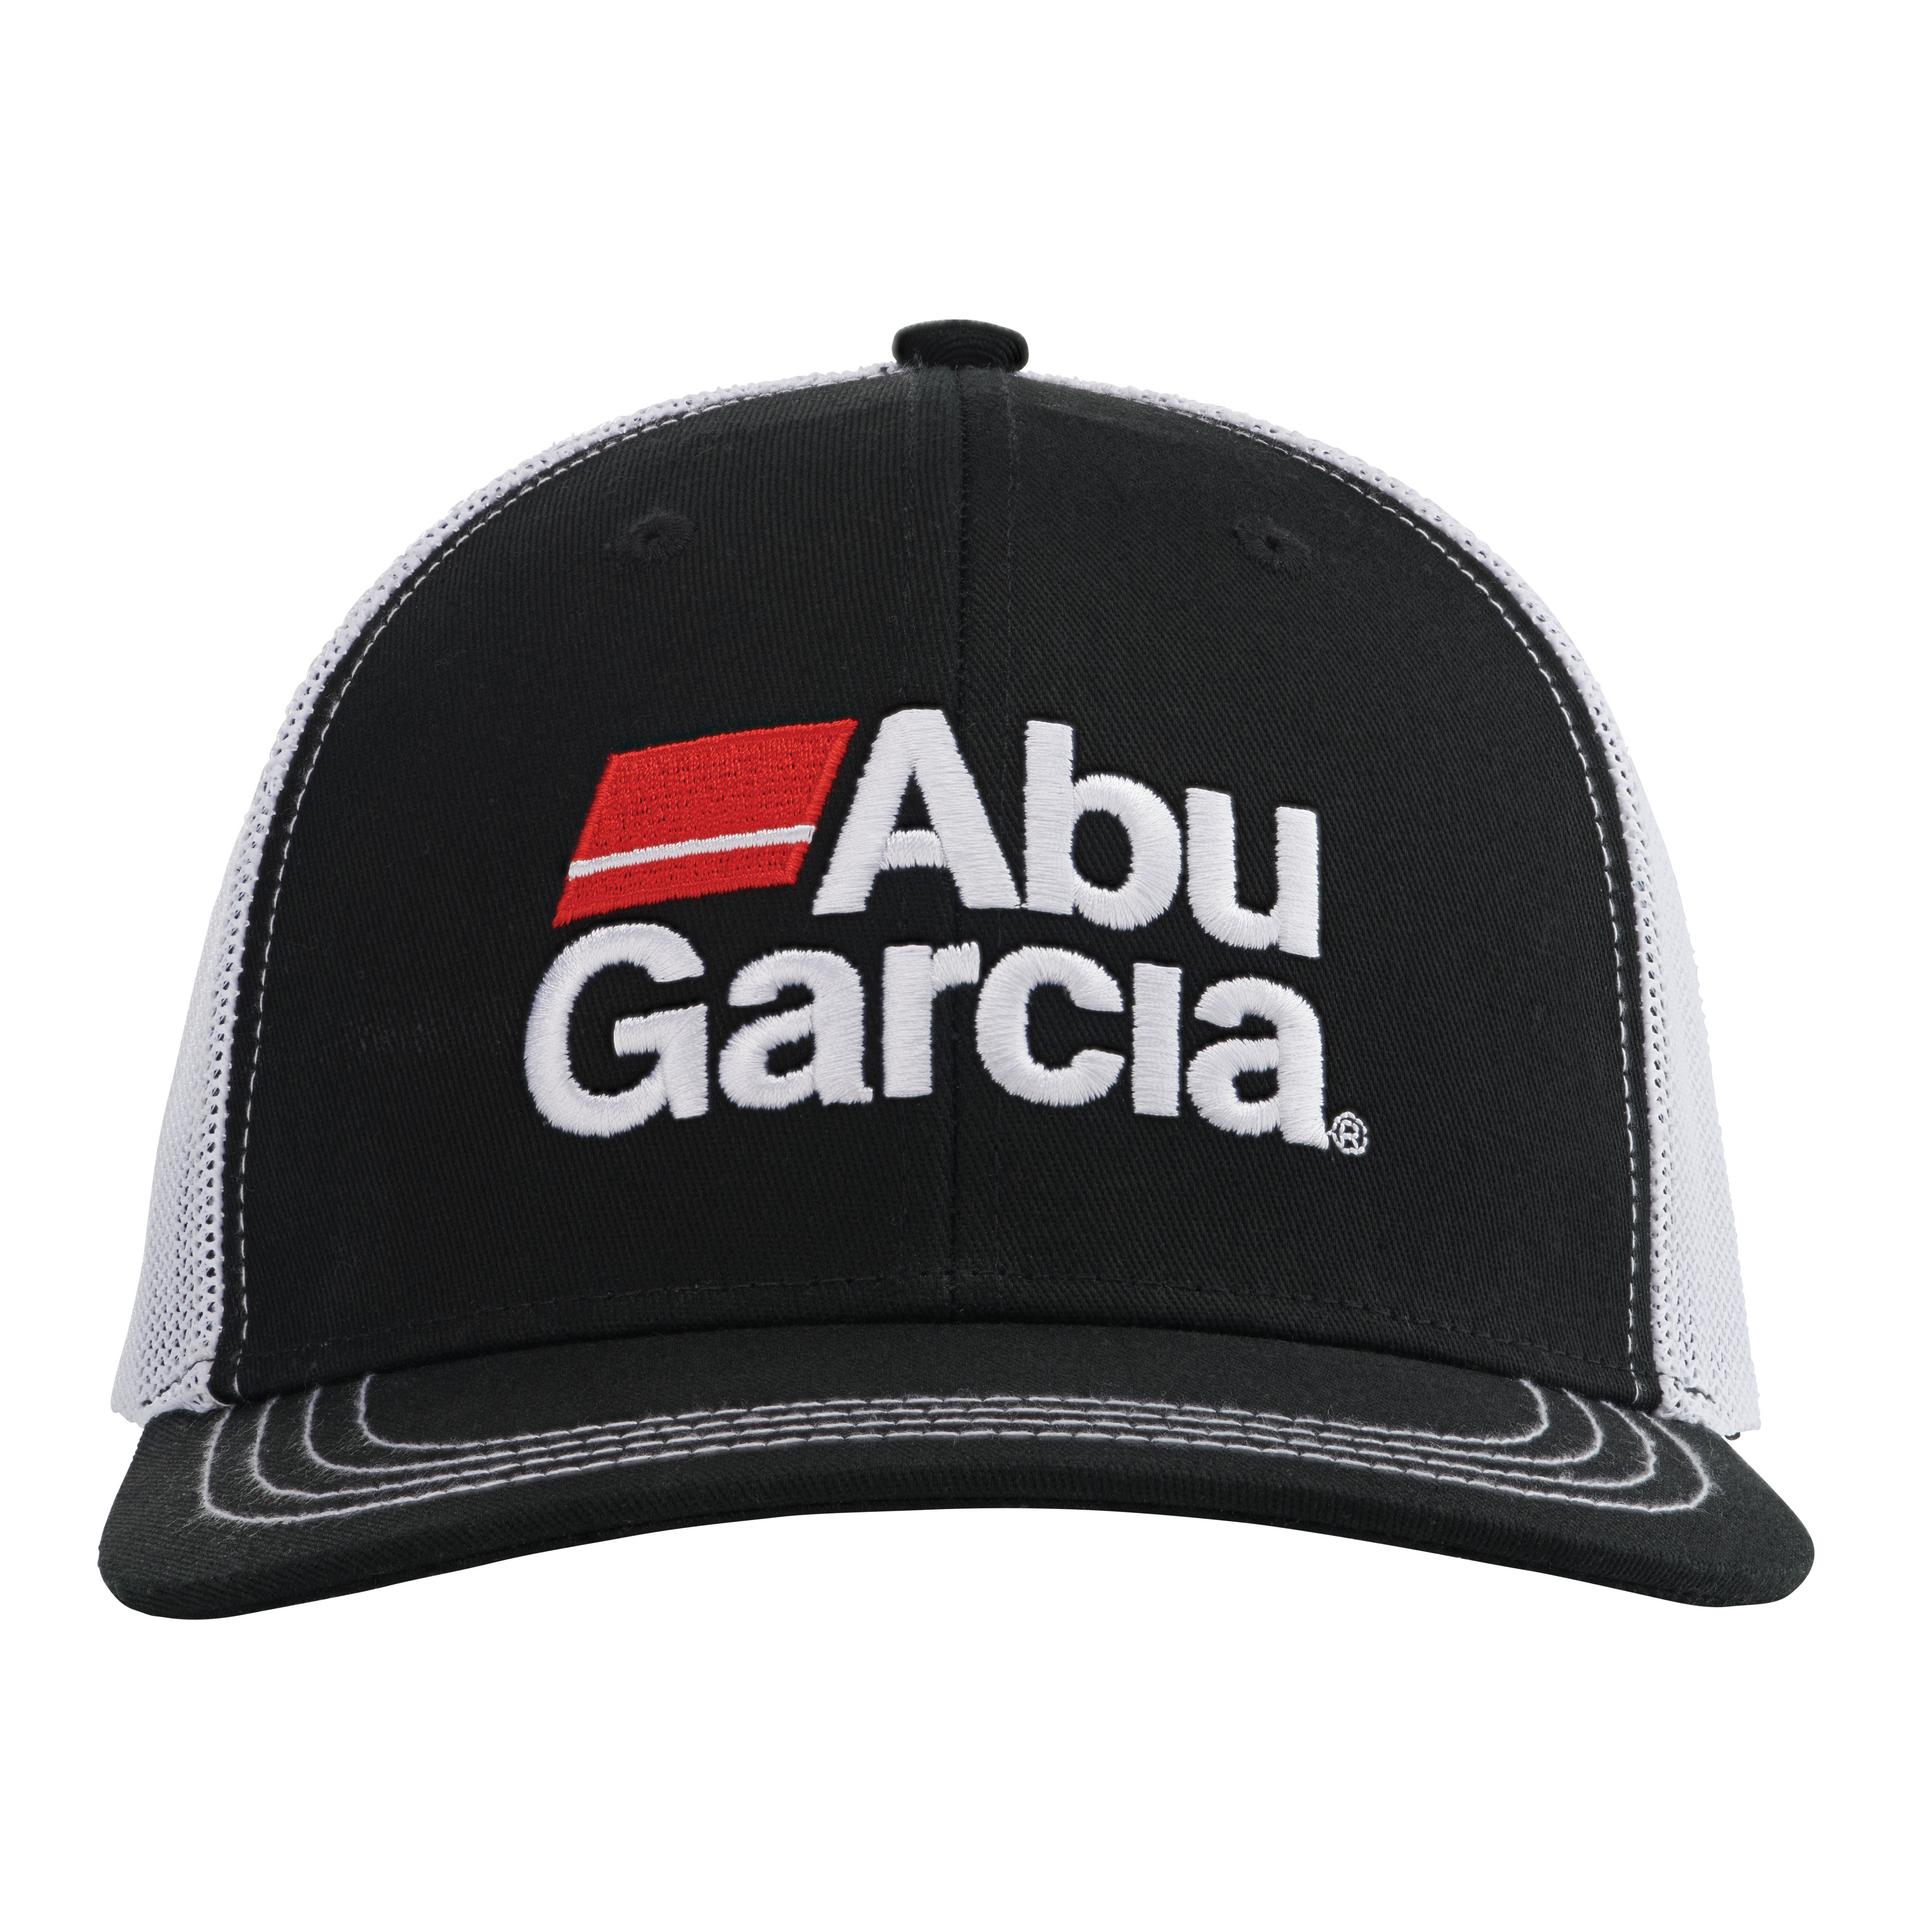 Abu Garcia Original Trucker Hat - Black/White, One Size Fits Most